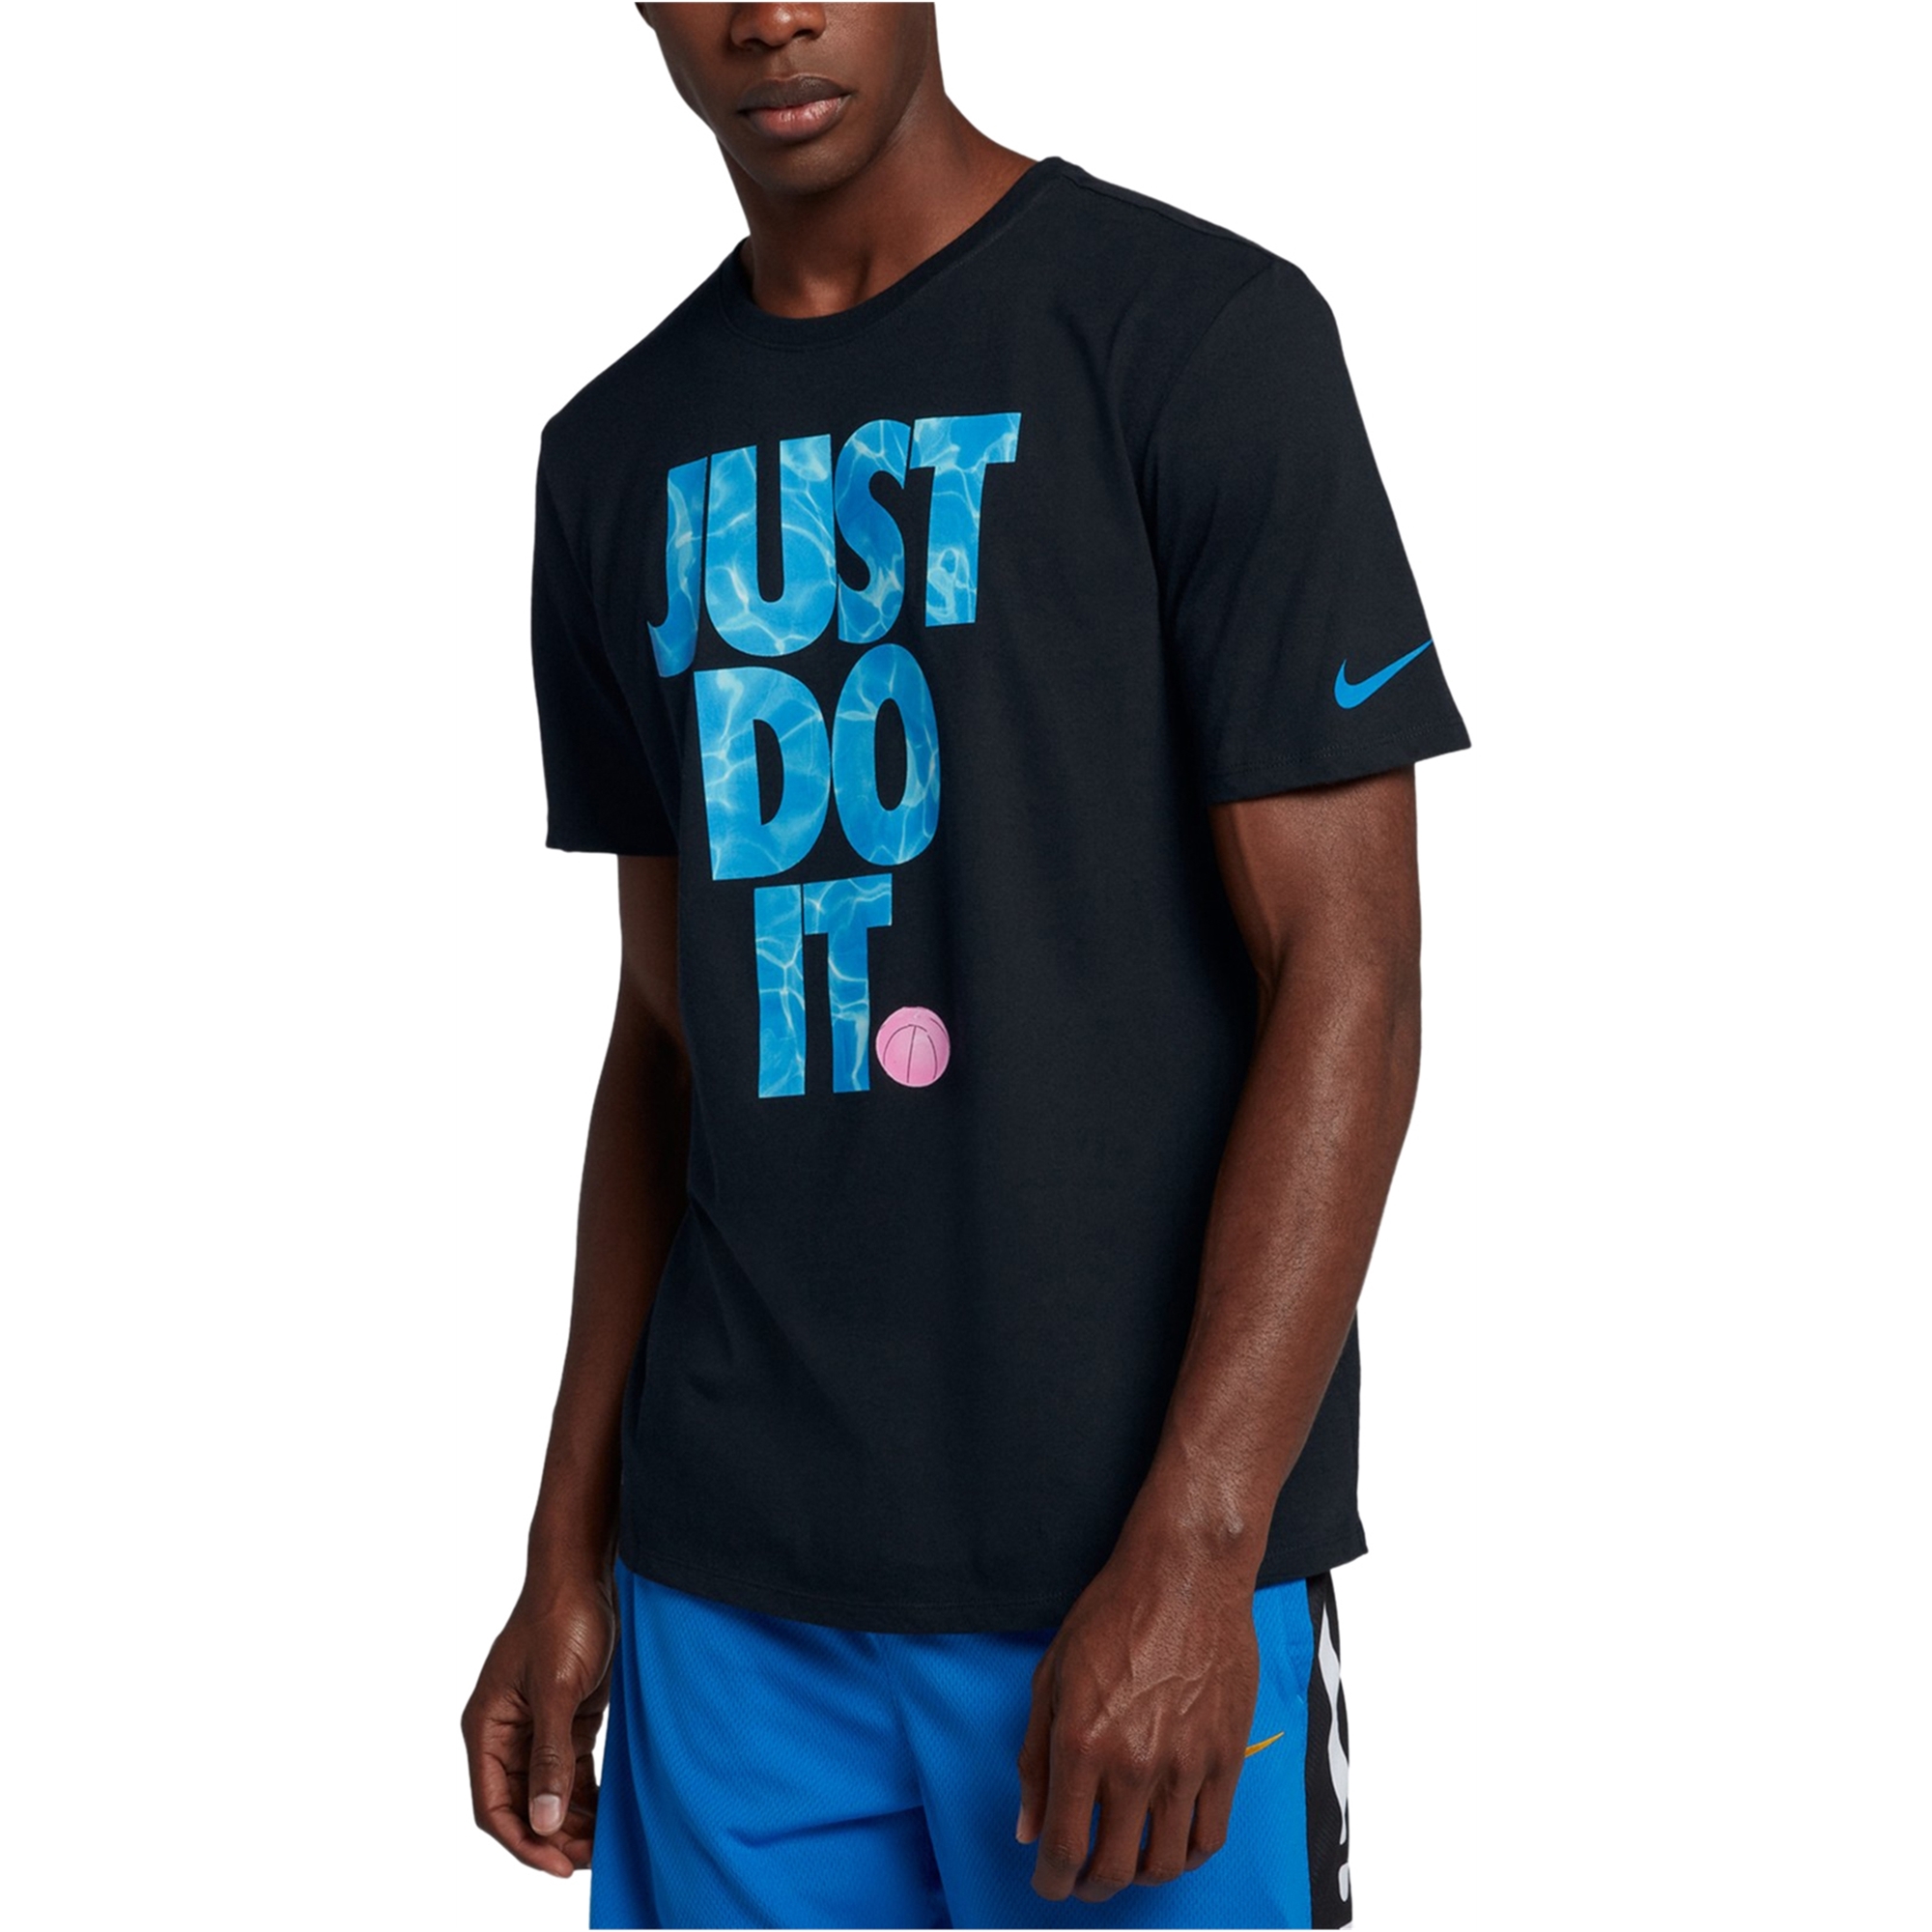 Nike - Nike Mens Just Do It Basketball Graphic T-Shirt, Black, Small - Walmart.com - Walmart.com